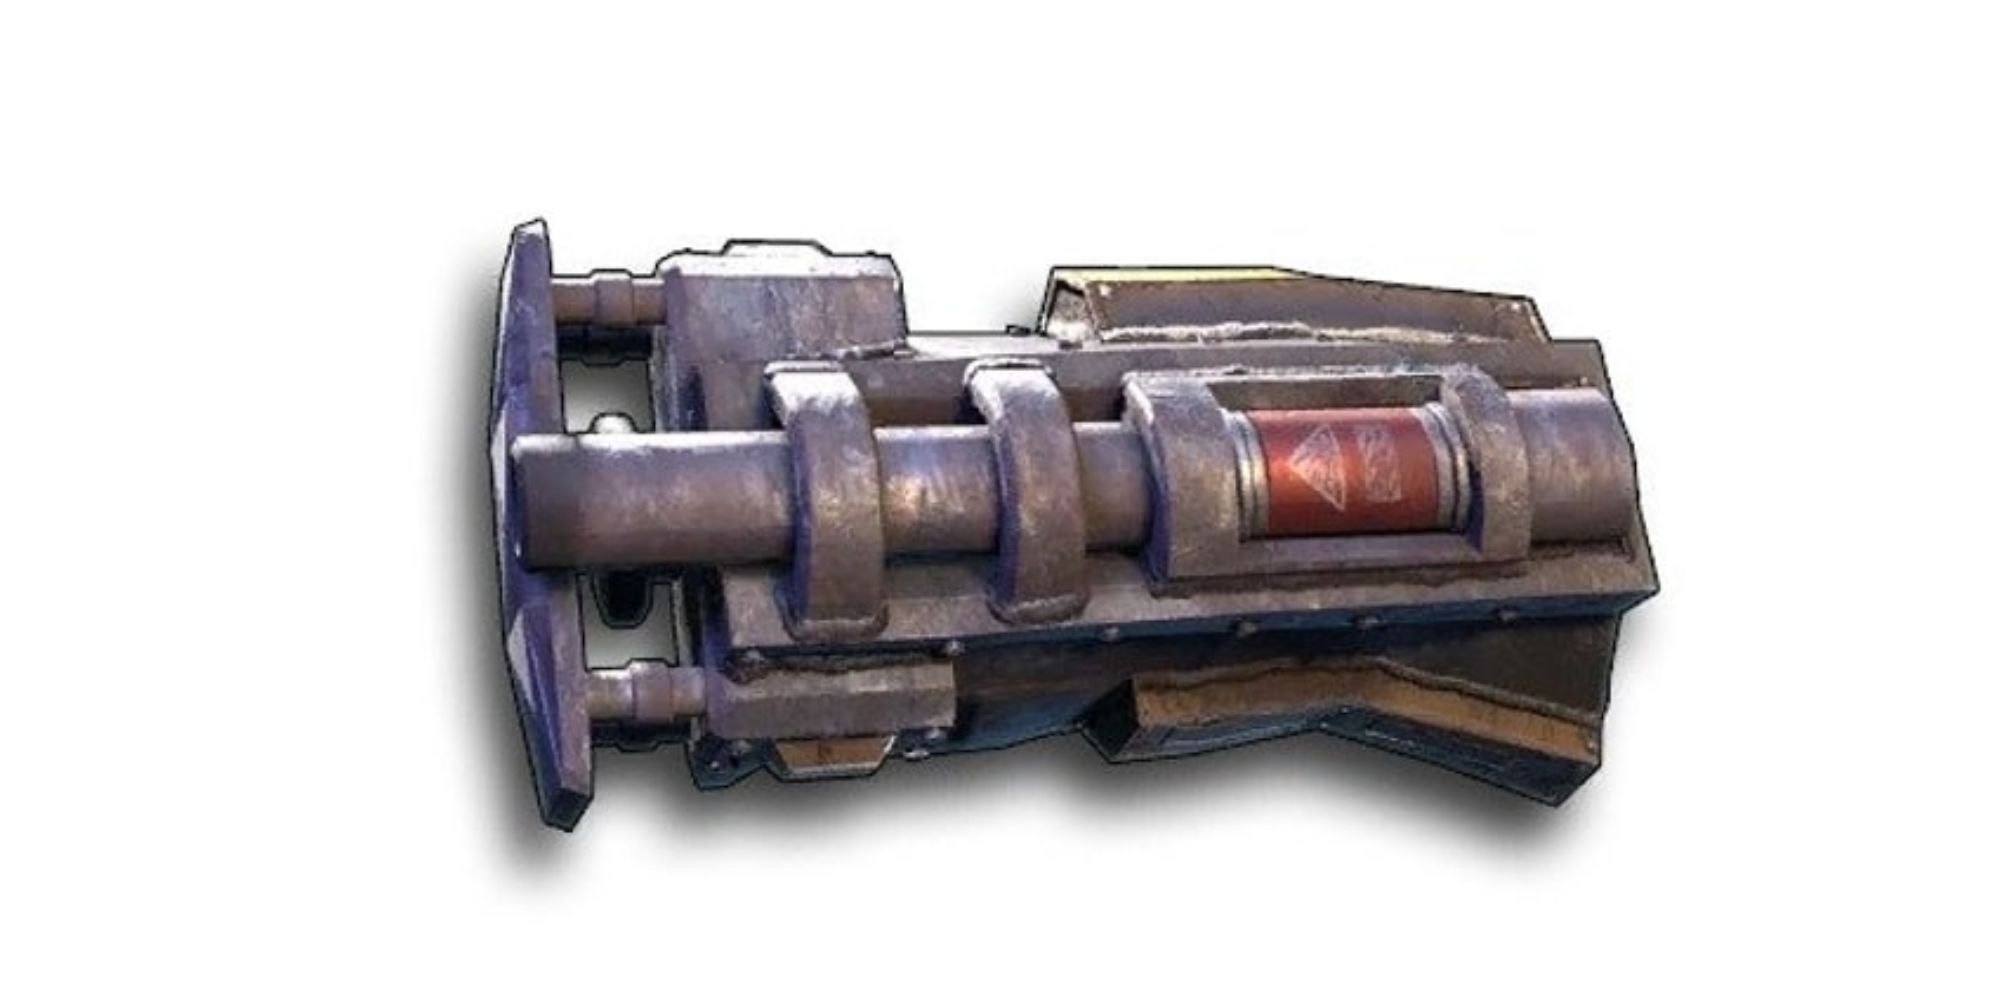 Close-up of Thundercracker weapon from Wasteland 3